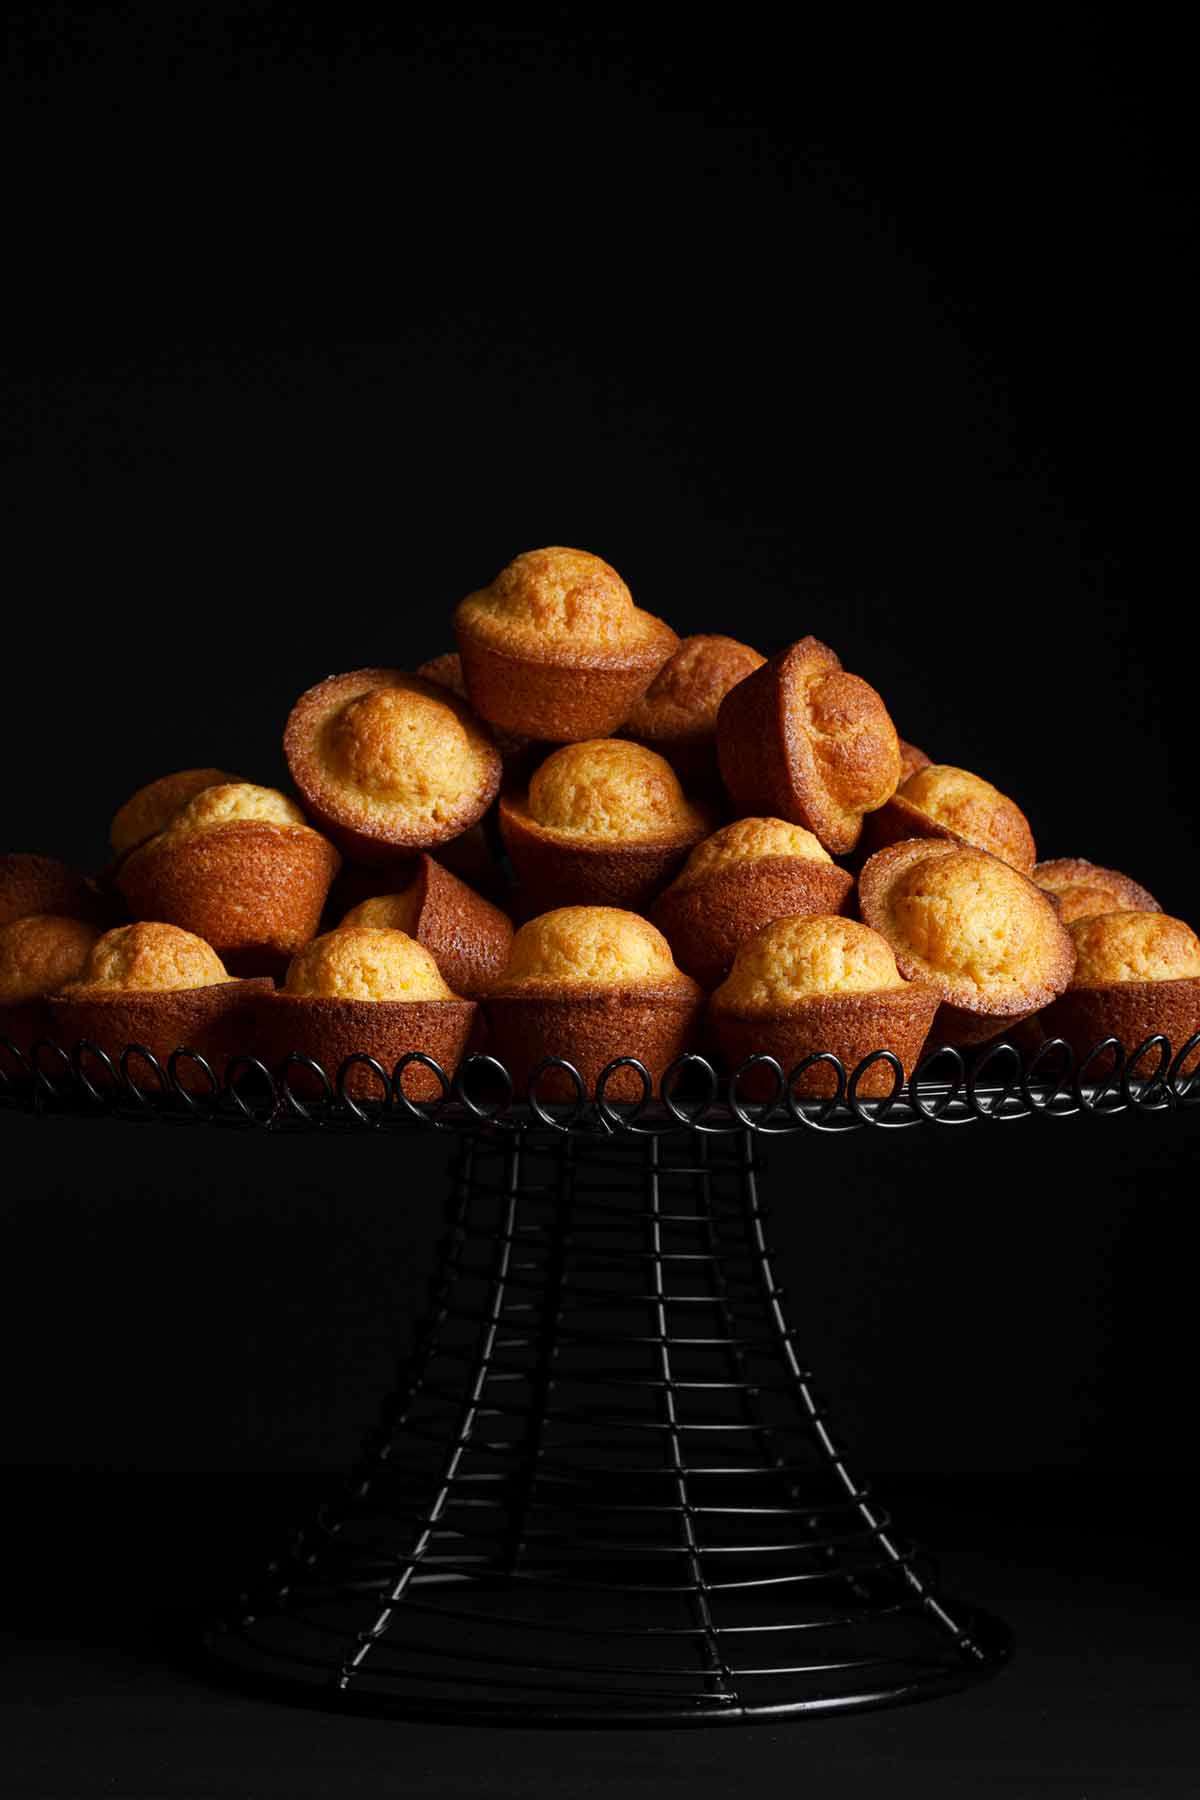 Portuguese mini lemon-orange cakes piled on a cake stand.